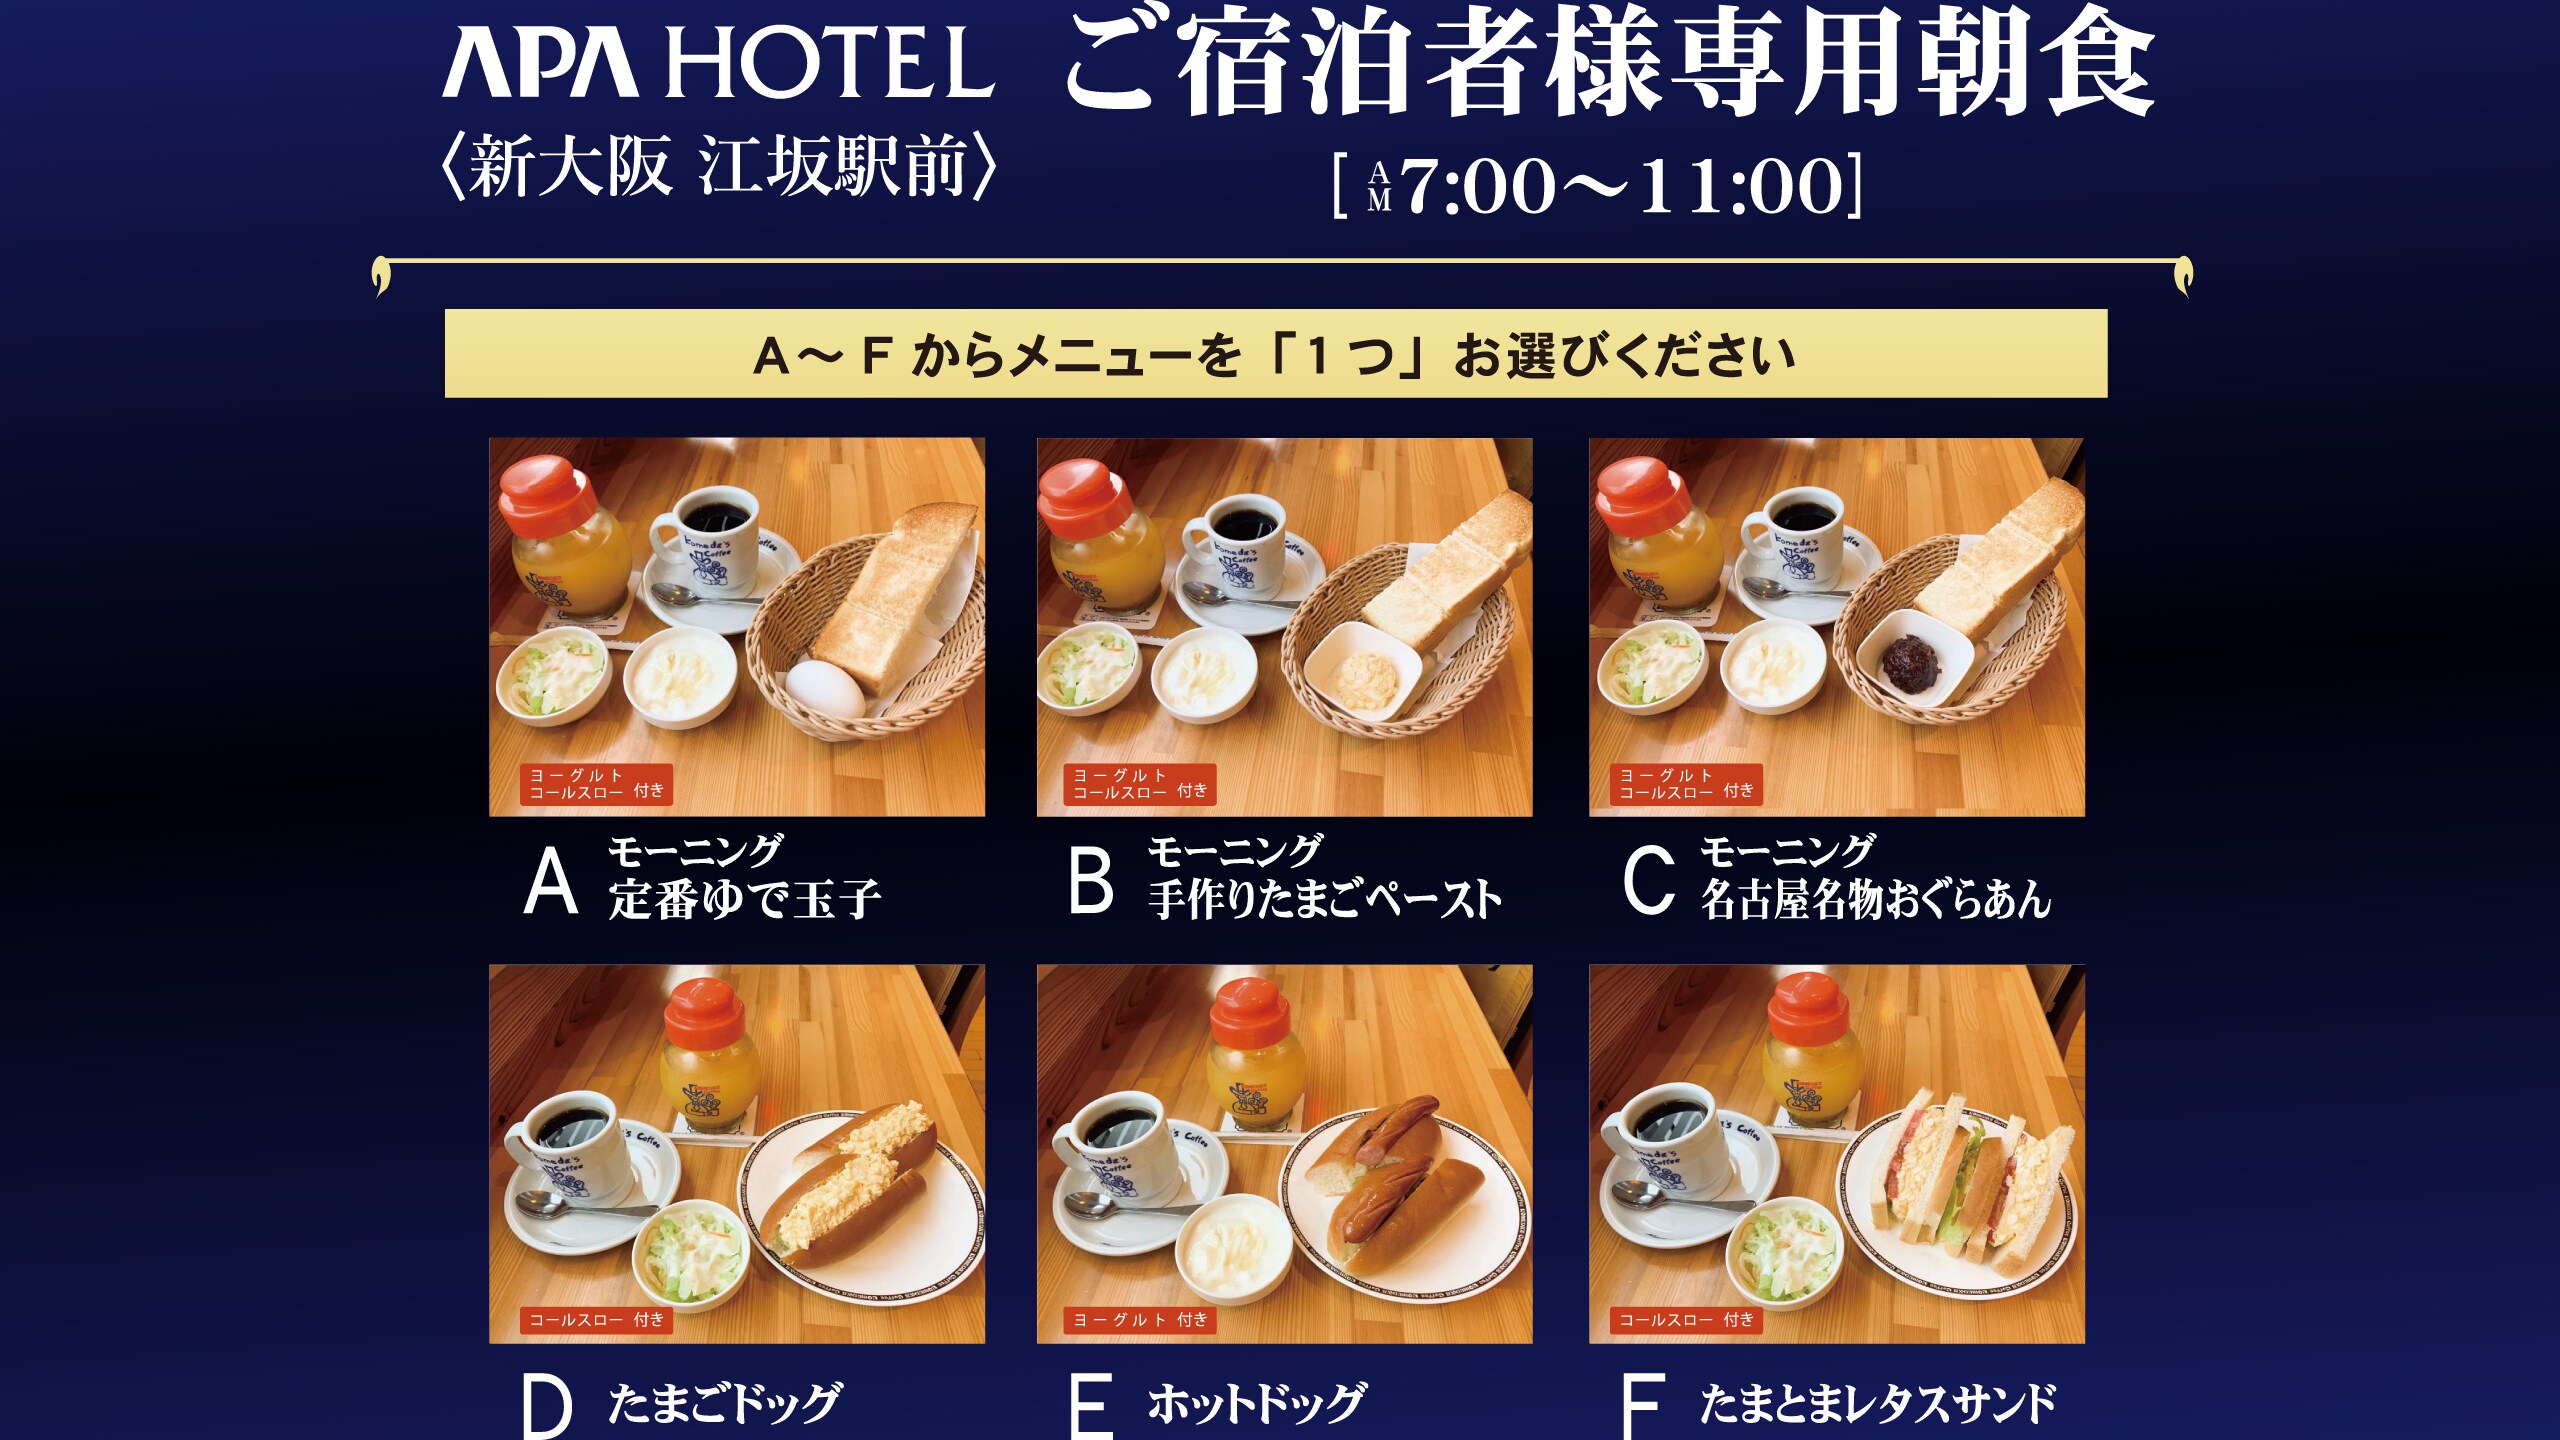 Hotel information and reservations for APA Hotel Shin-Osaka Esaka